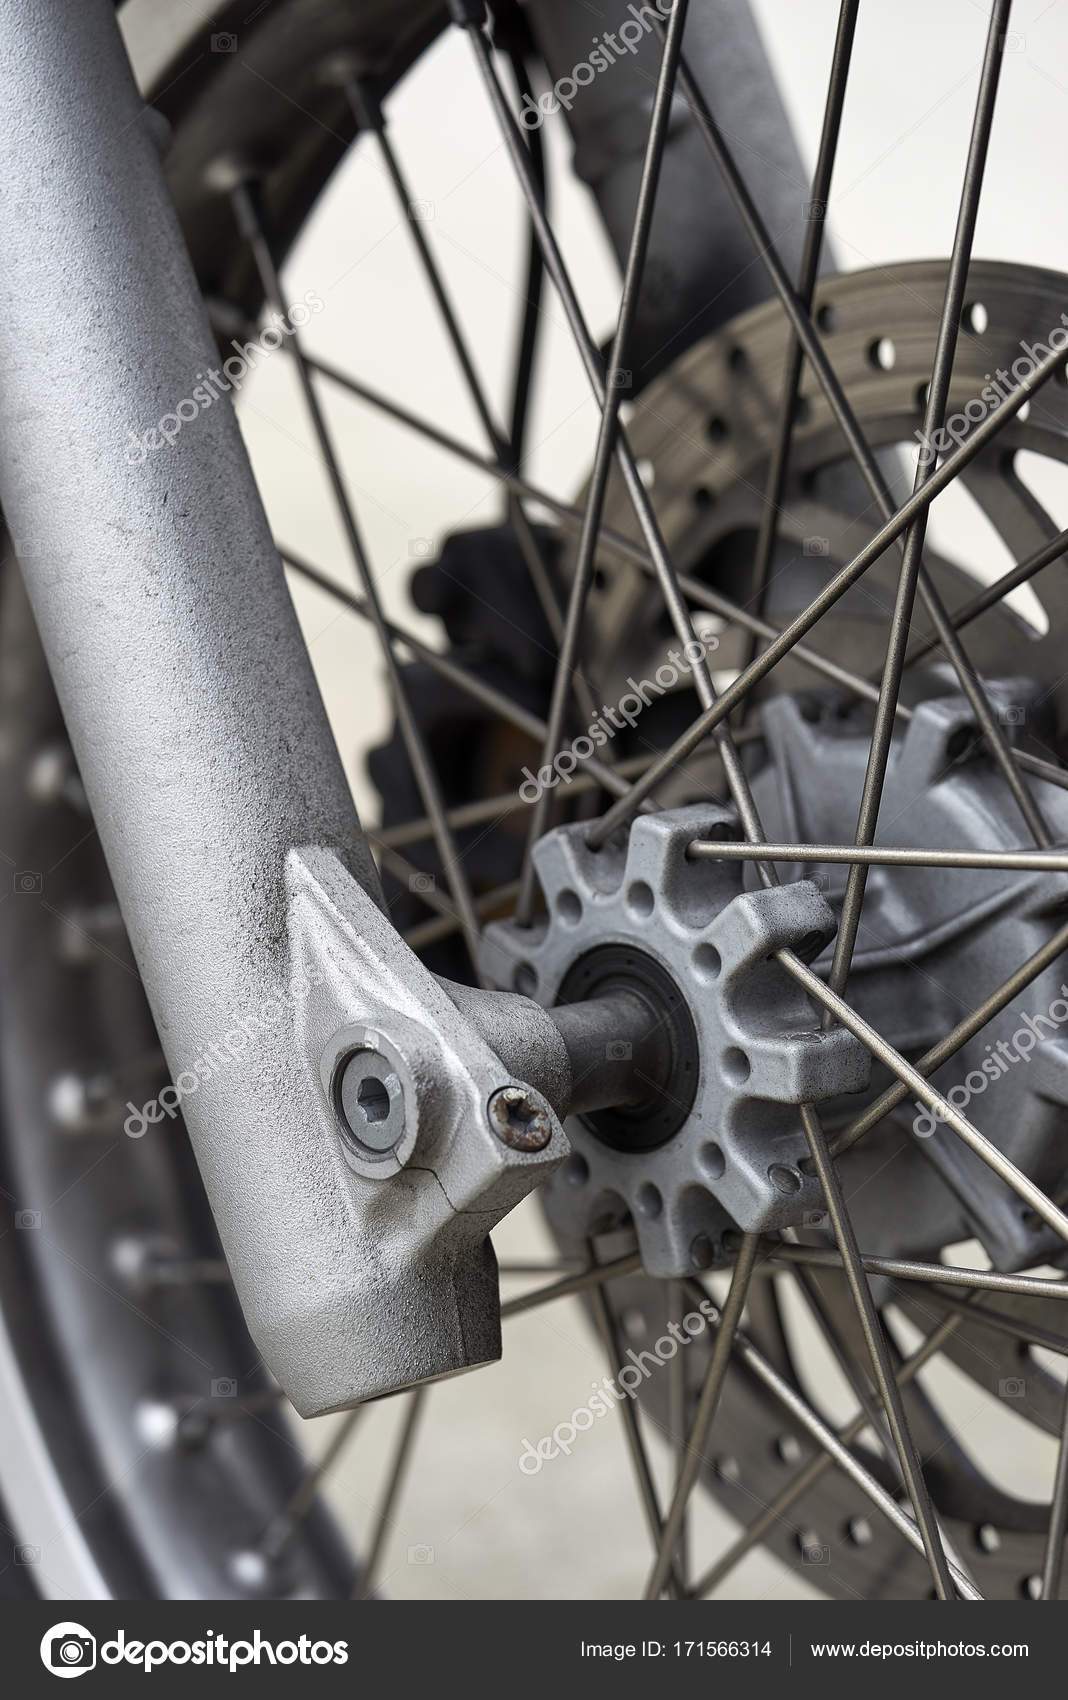 bike wheel components